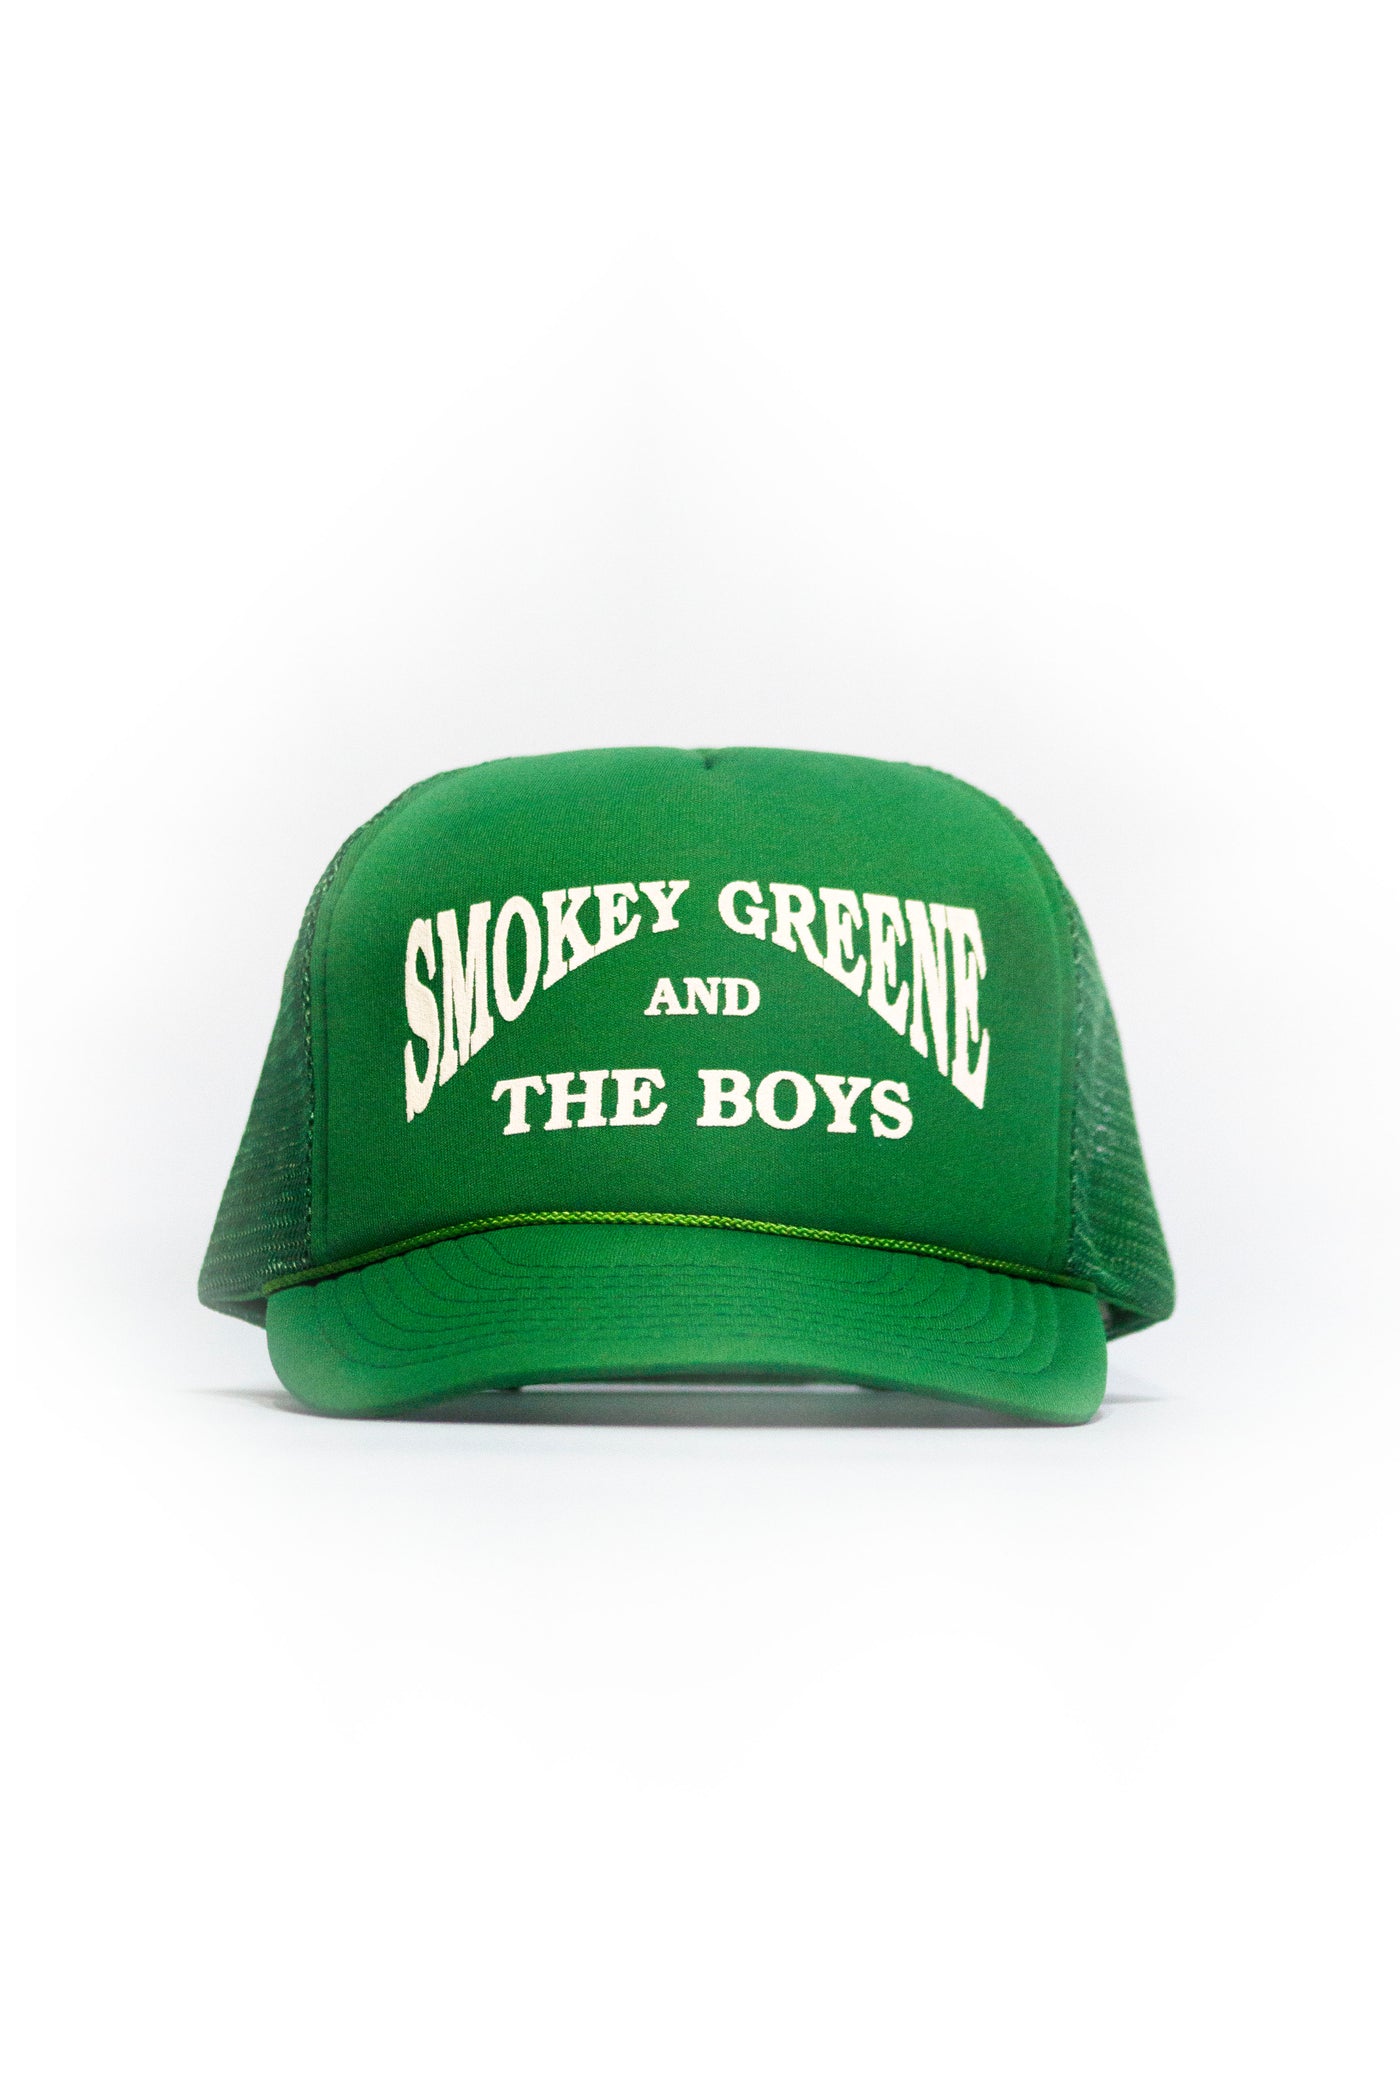 Vintage 80s Smokey Greene & The Boys Trucker Hat